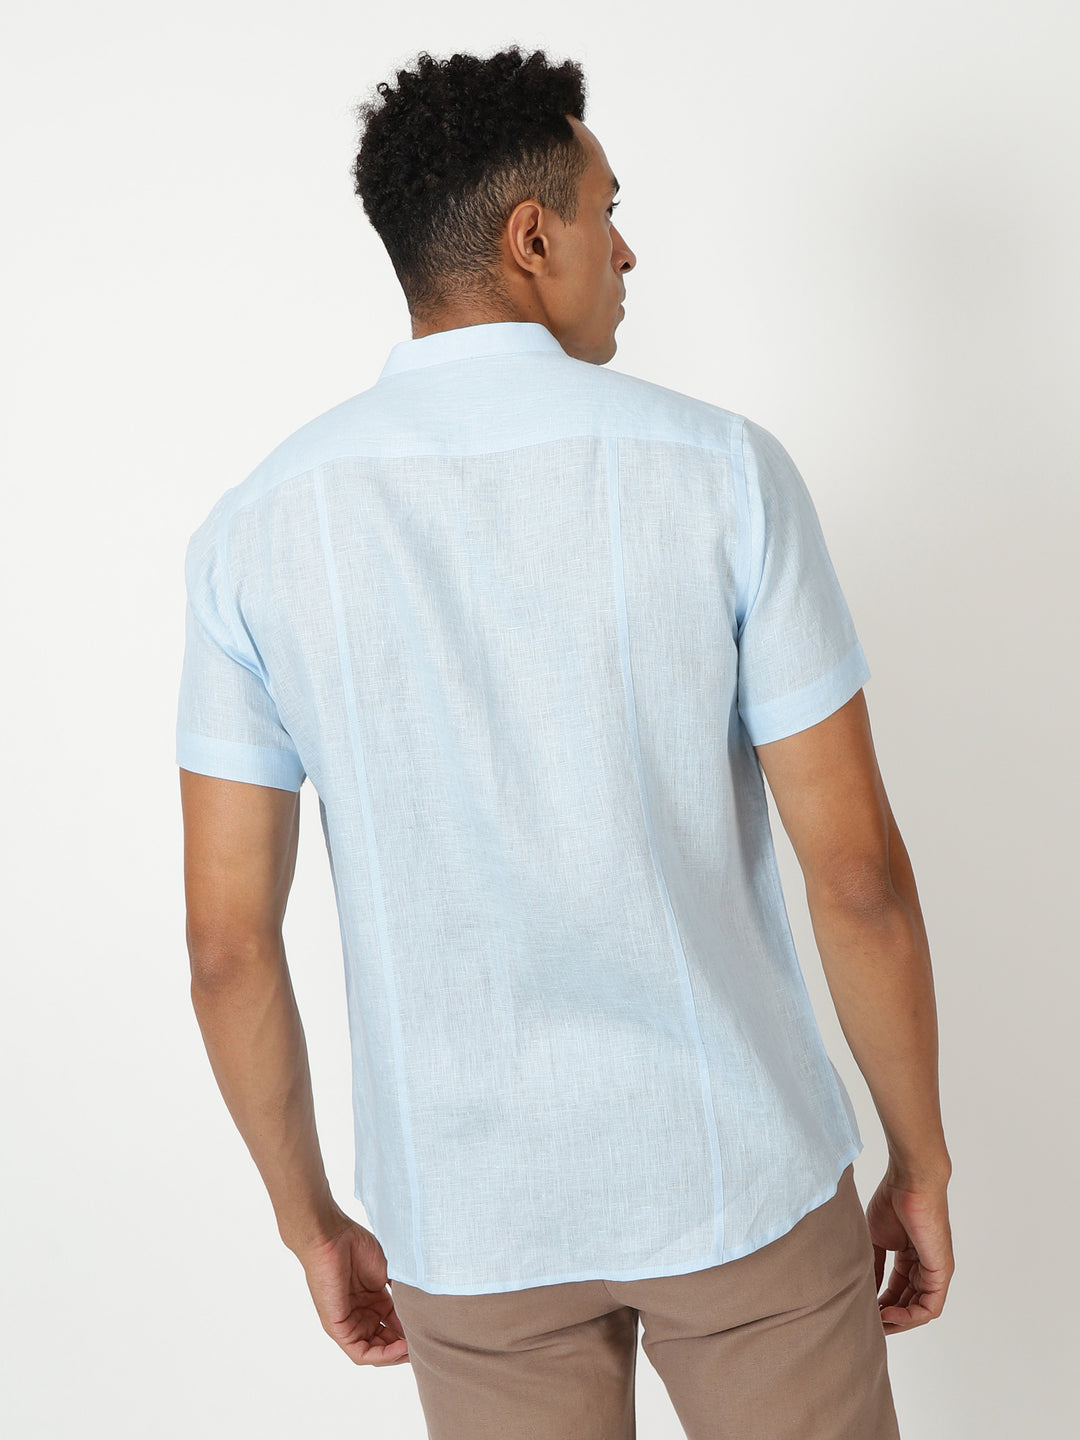 Trevor - Pure Linen Mandarin Collar Half Sleeve Shirt - Sky Blue